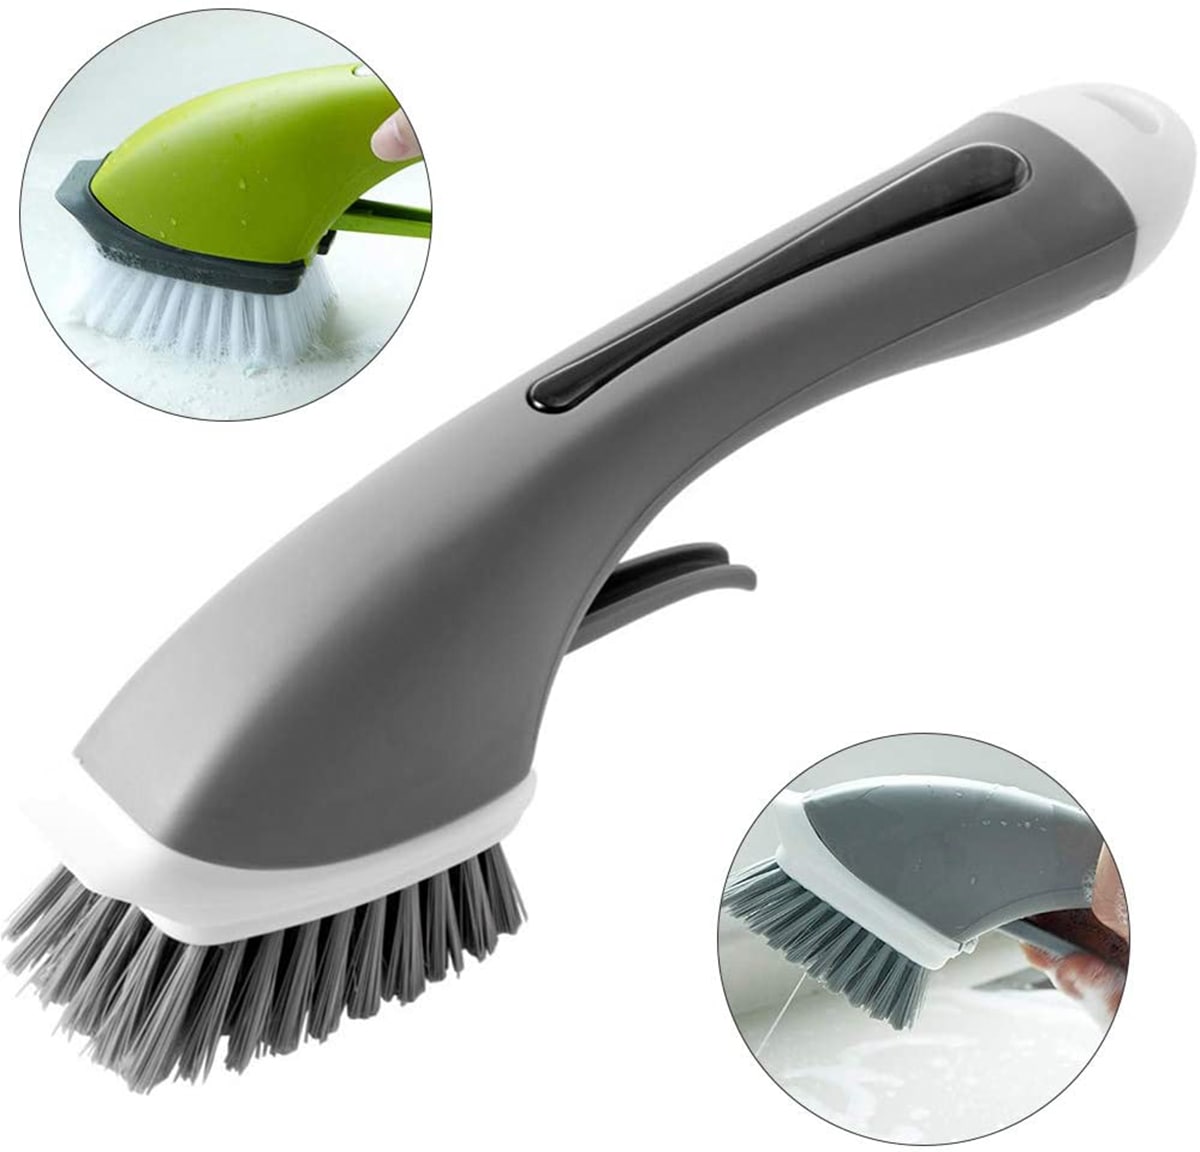 Home Basics Heavy-Duty Soap Dispensing Plastic Dish Brush with No